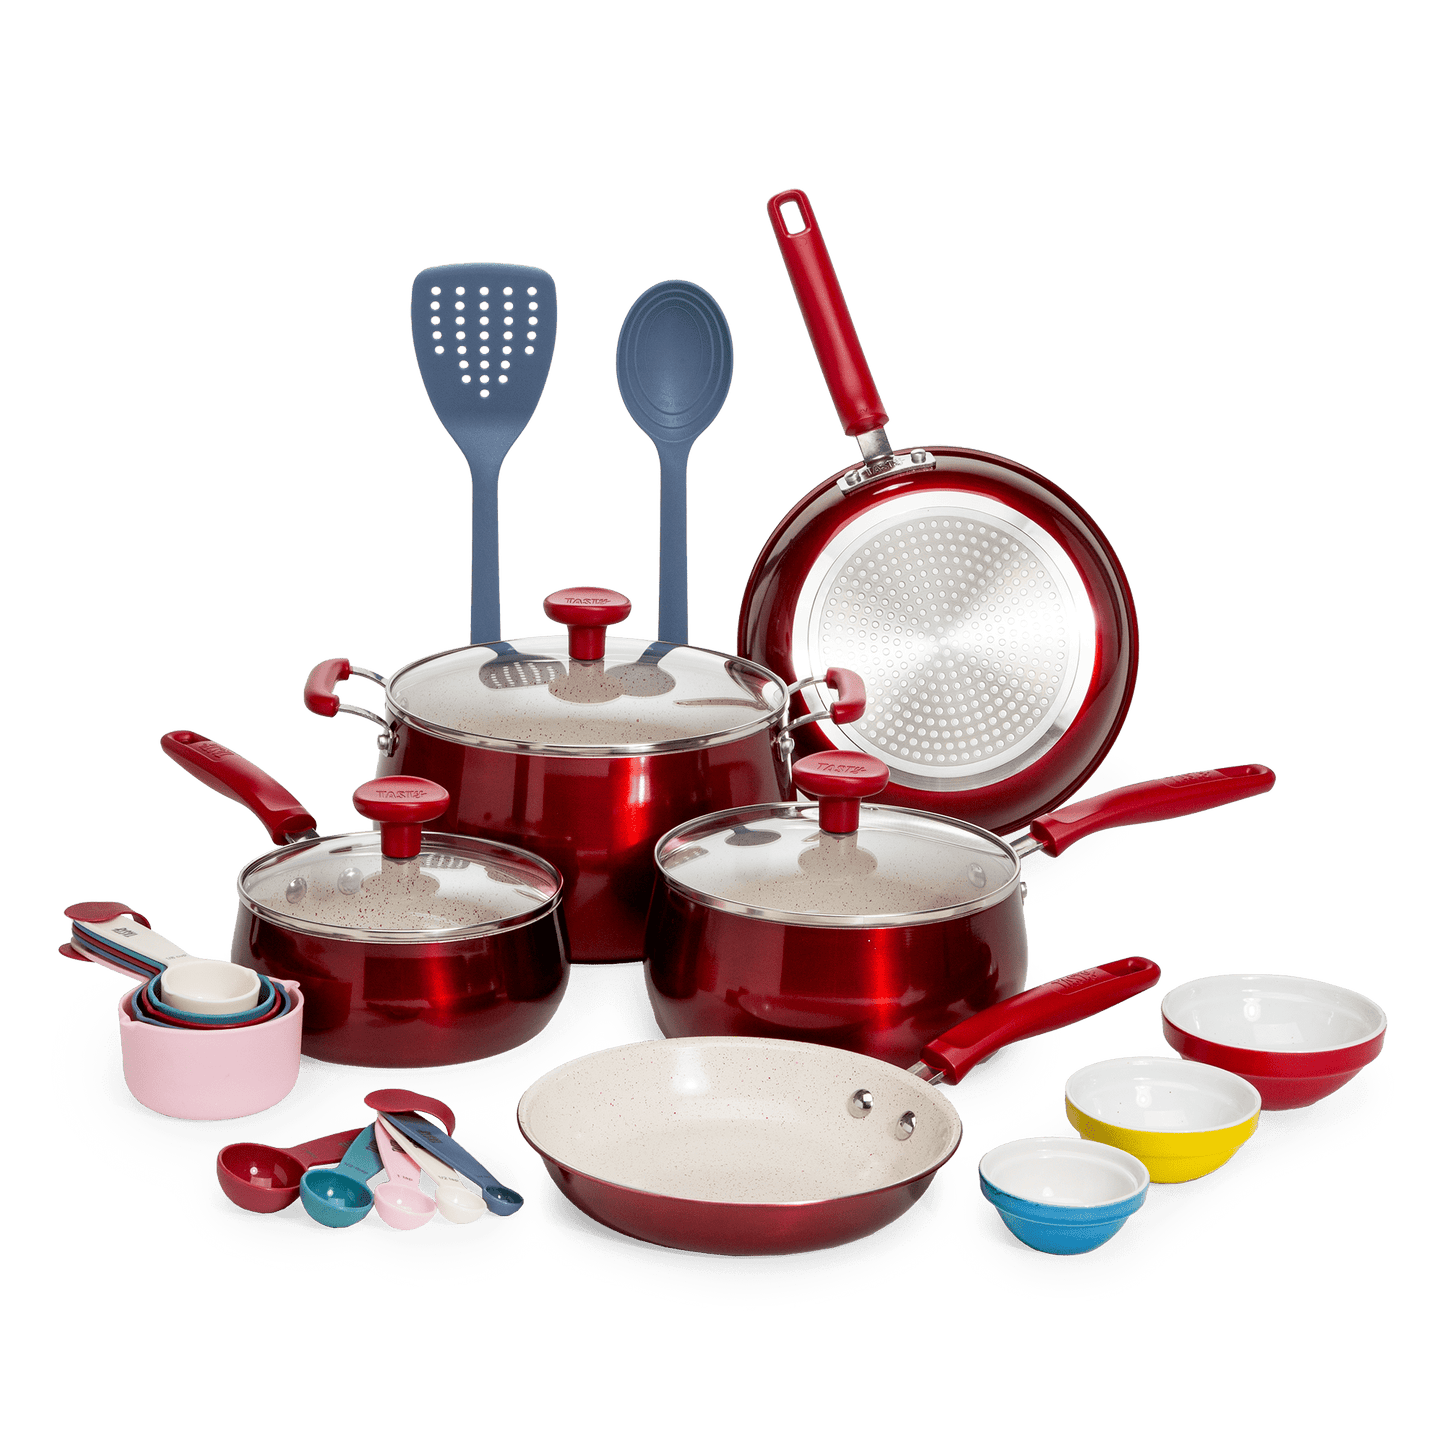 Clean Ceramic 23 Piece Non-Stick Aluminum Cookware Set, Red